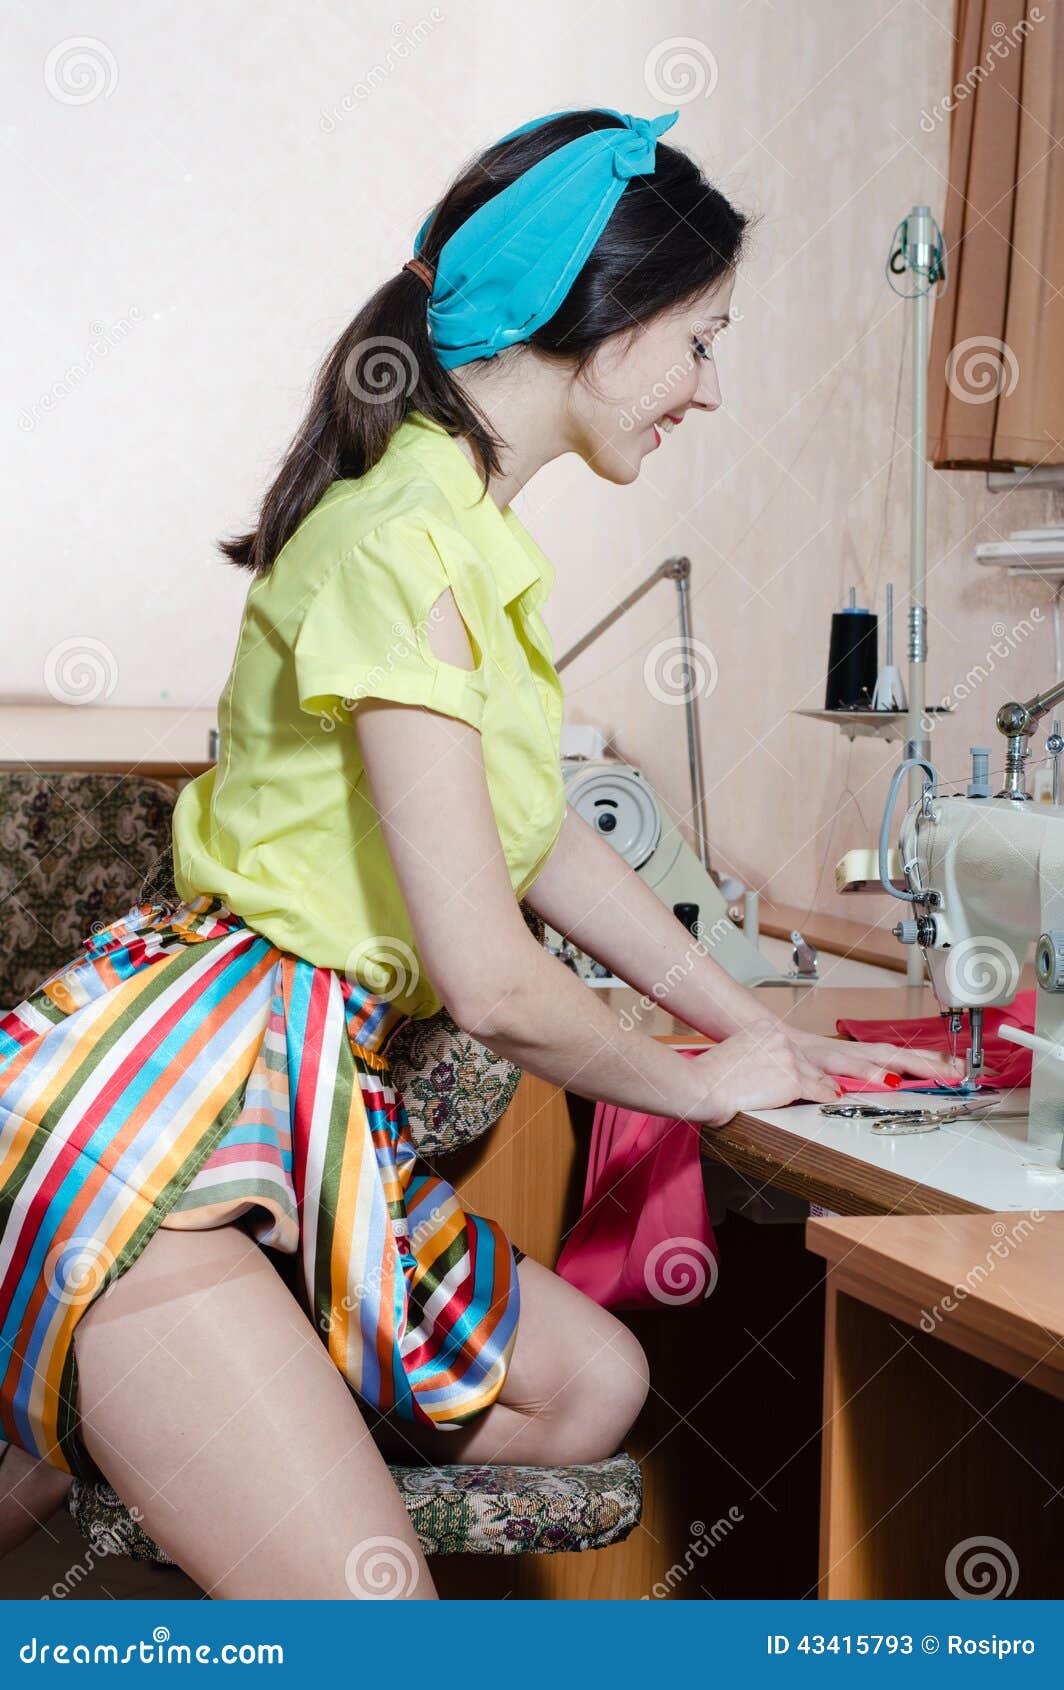 Hermosa joven mujer coser ropa con máquina de coser - Stockphoto #24213096